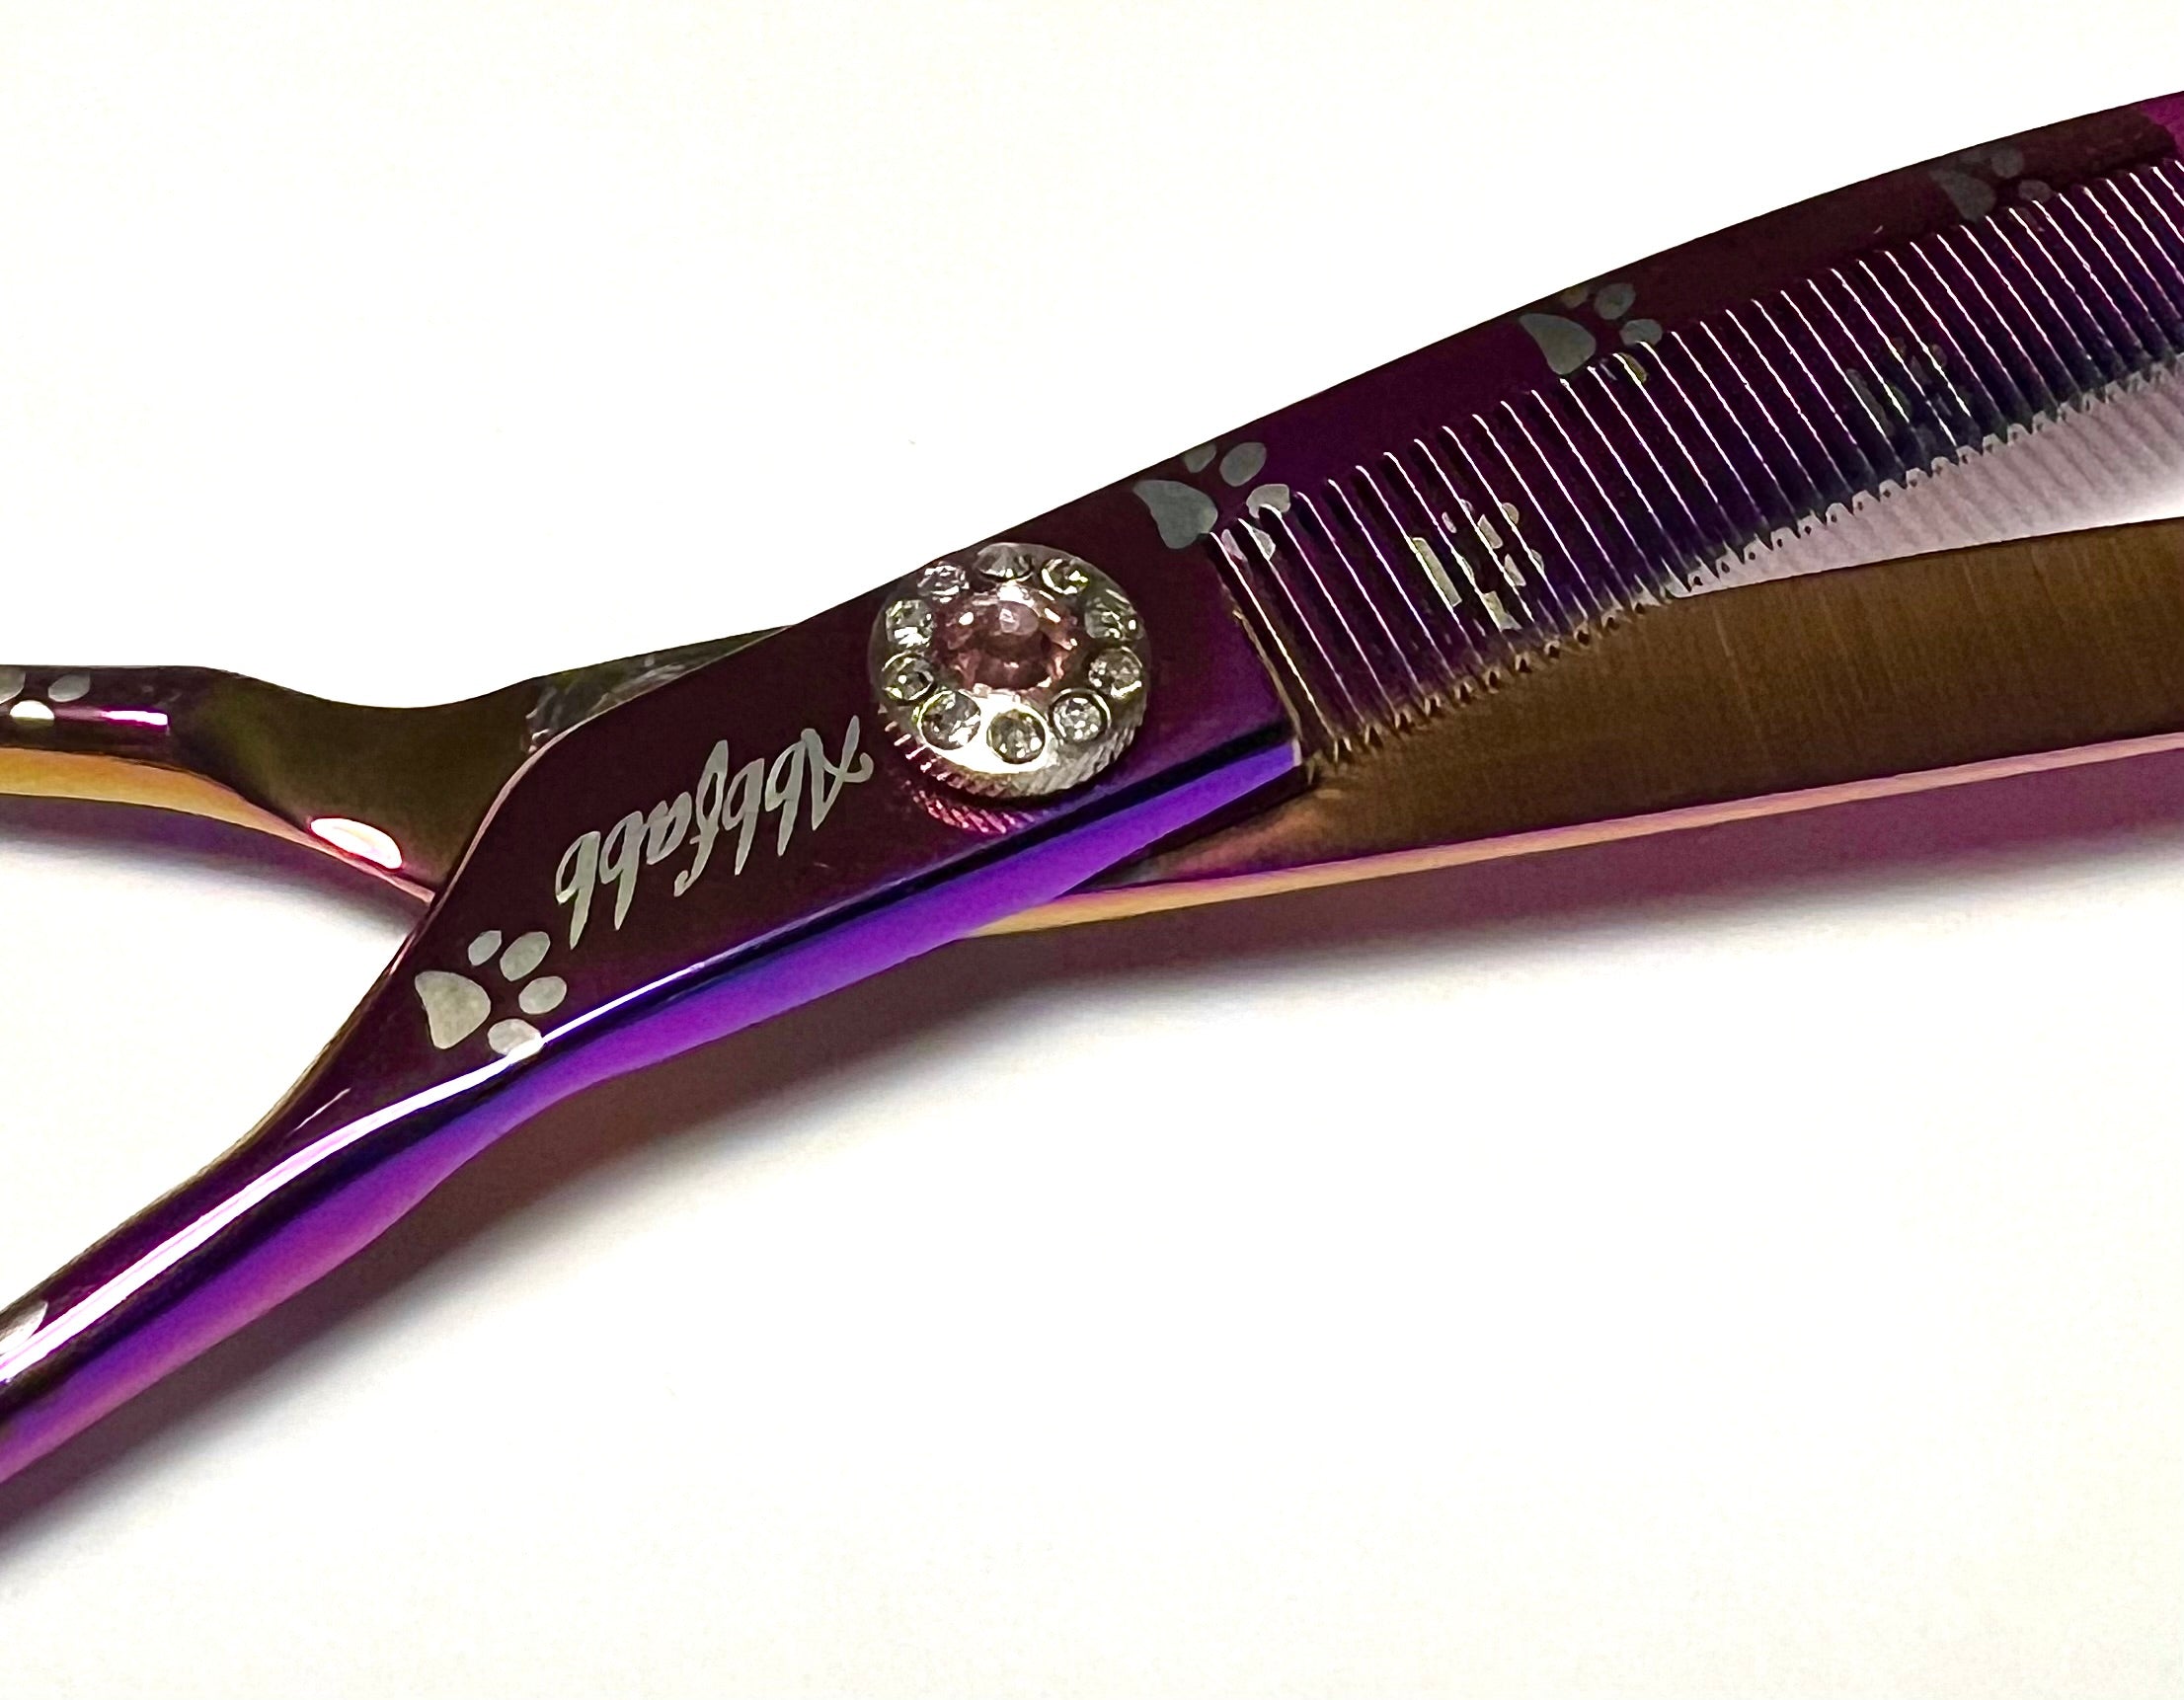 curved blending scissor for dog grooming-blenders-curved scissors for dog grooming by Abbfabb